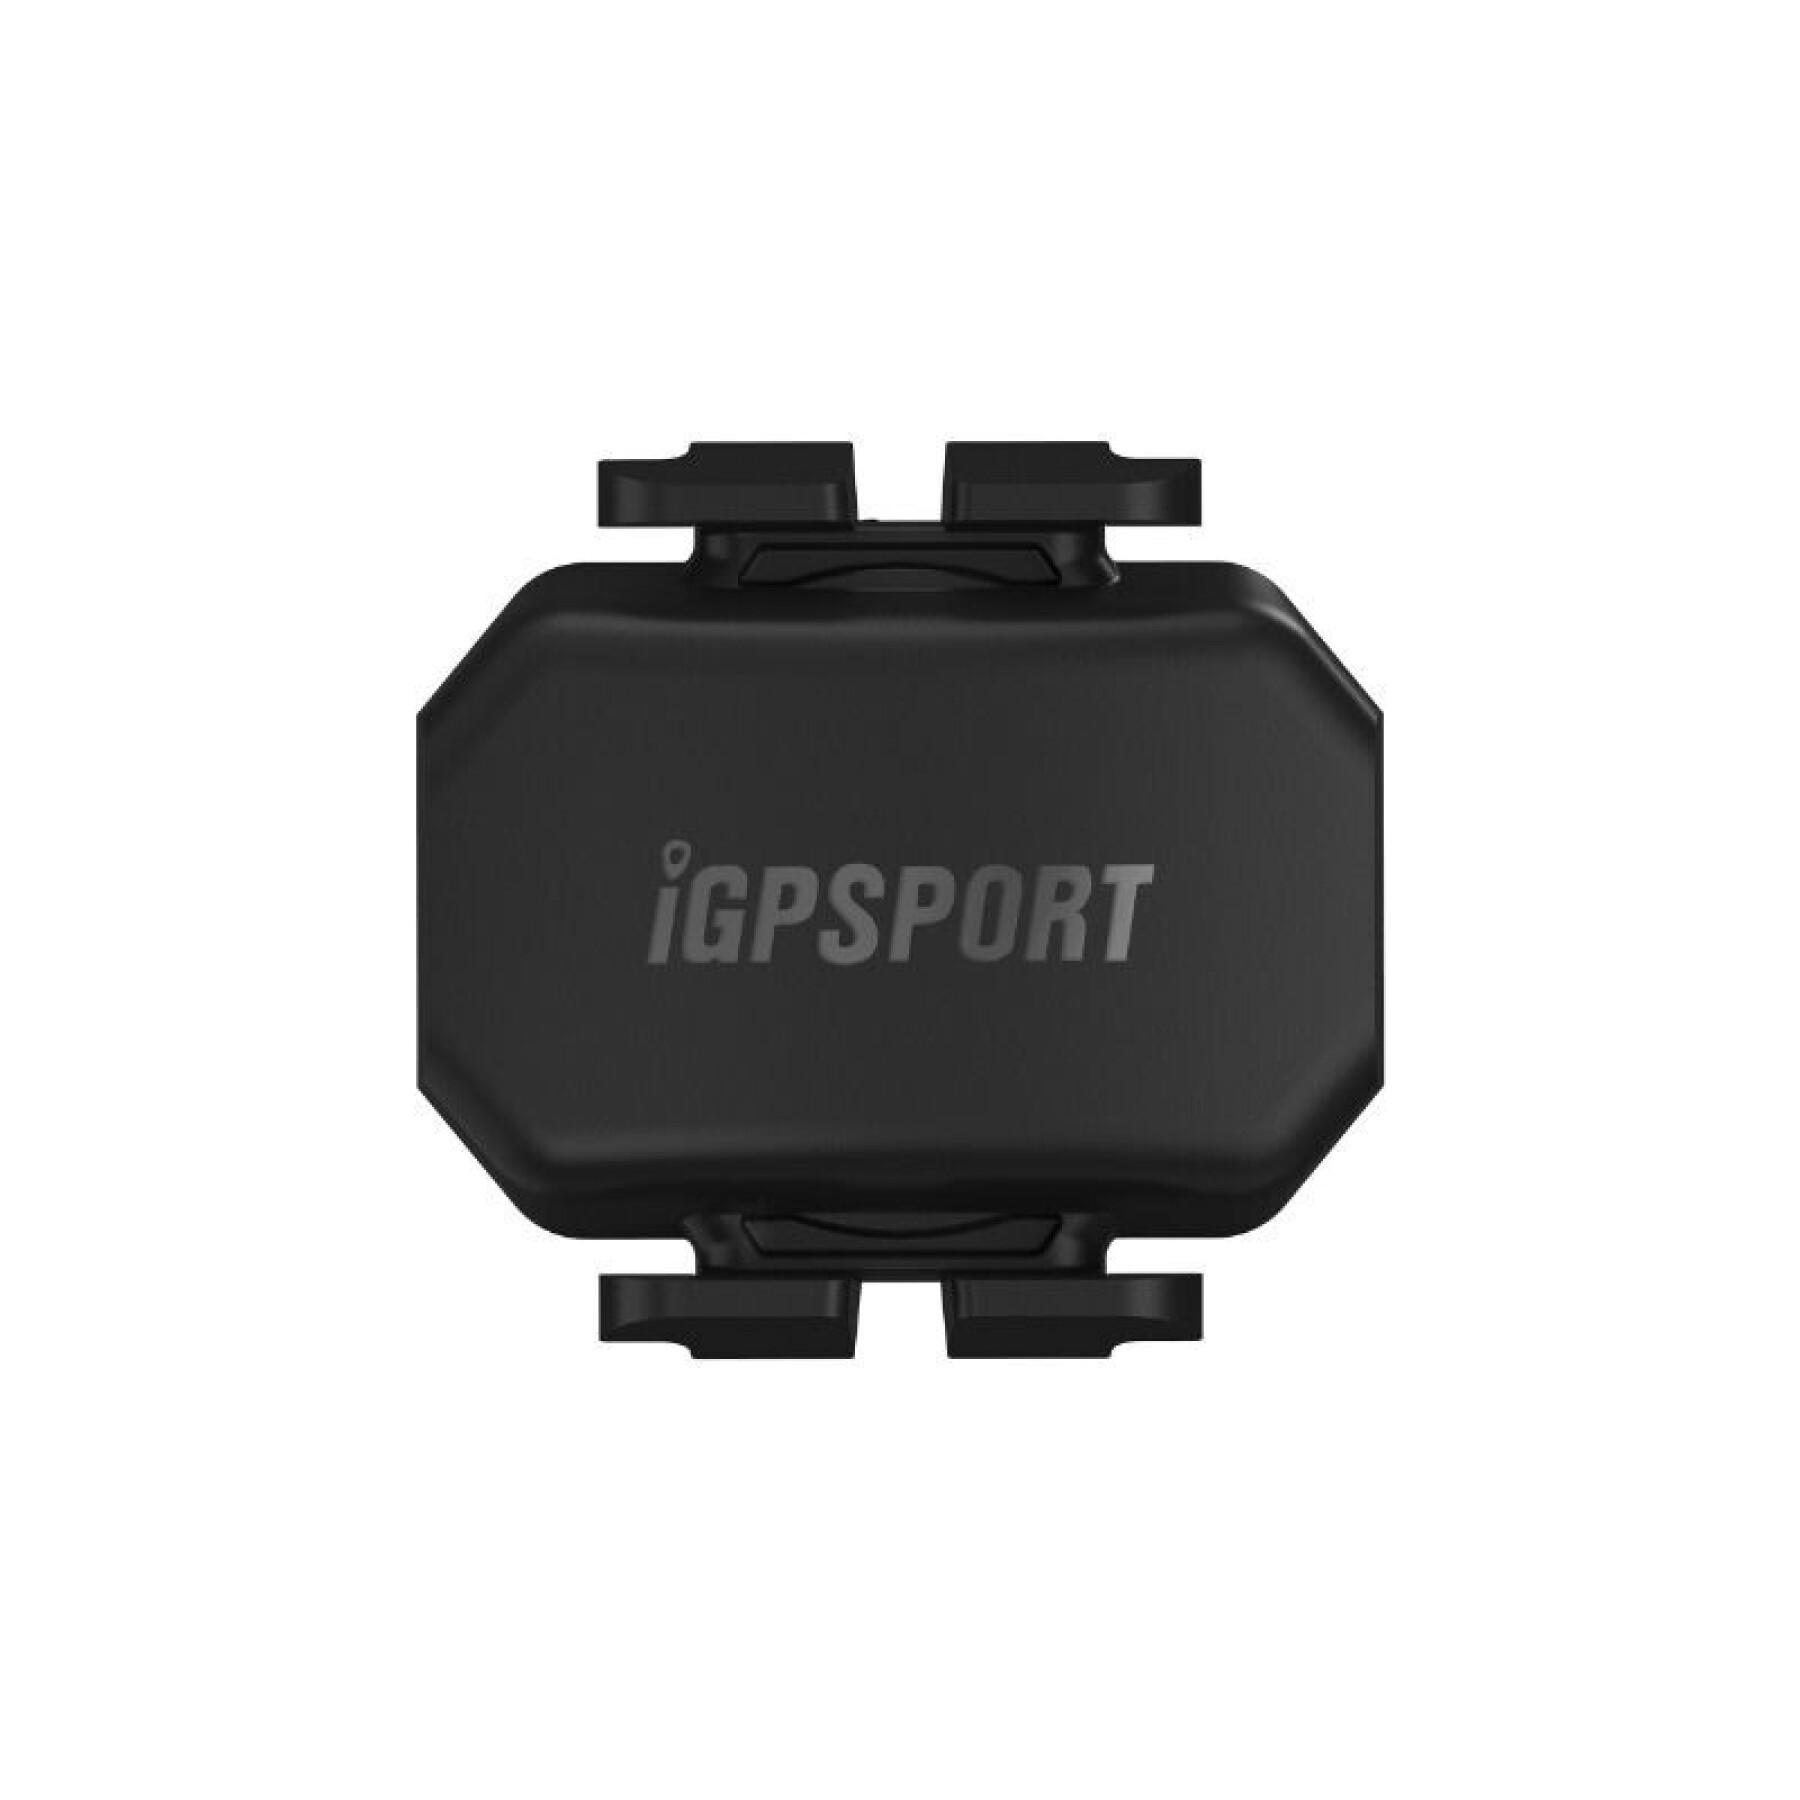 Cadence sensor for Garmin compatible computers and other Igpsport CAD70 IGPS 630-620 -520 -320